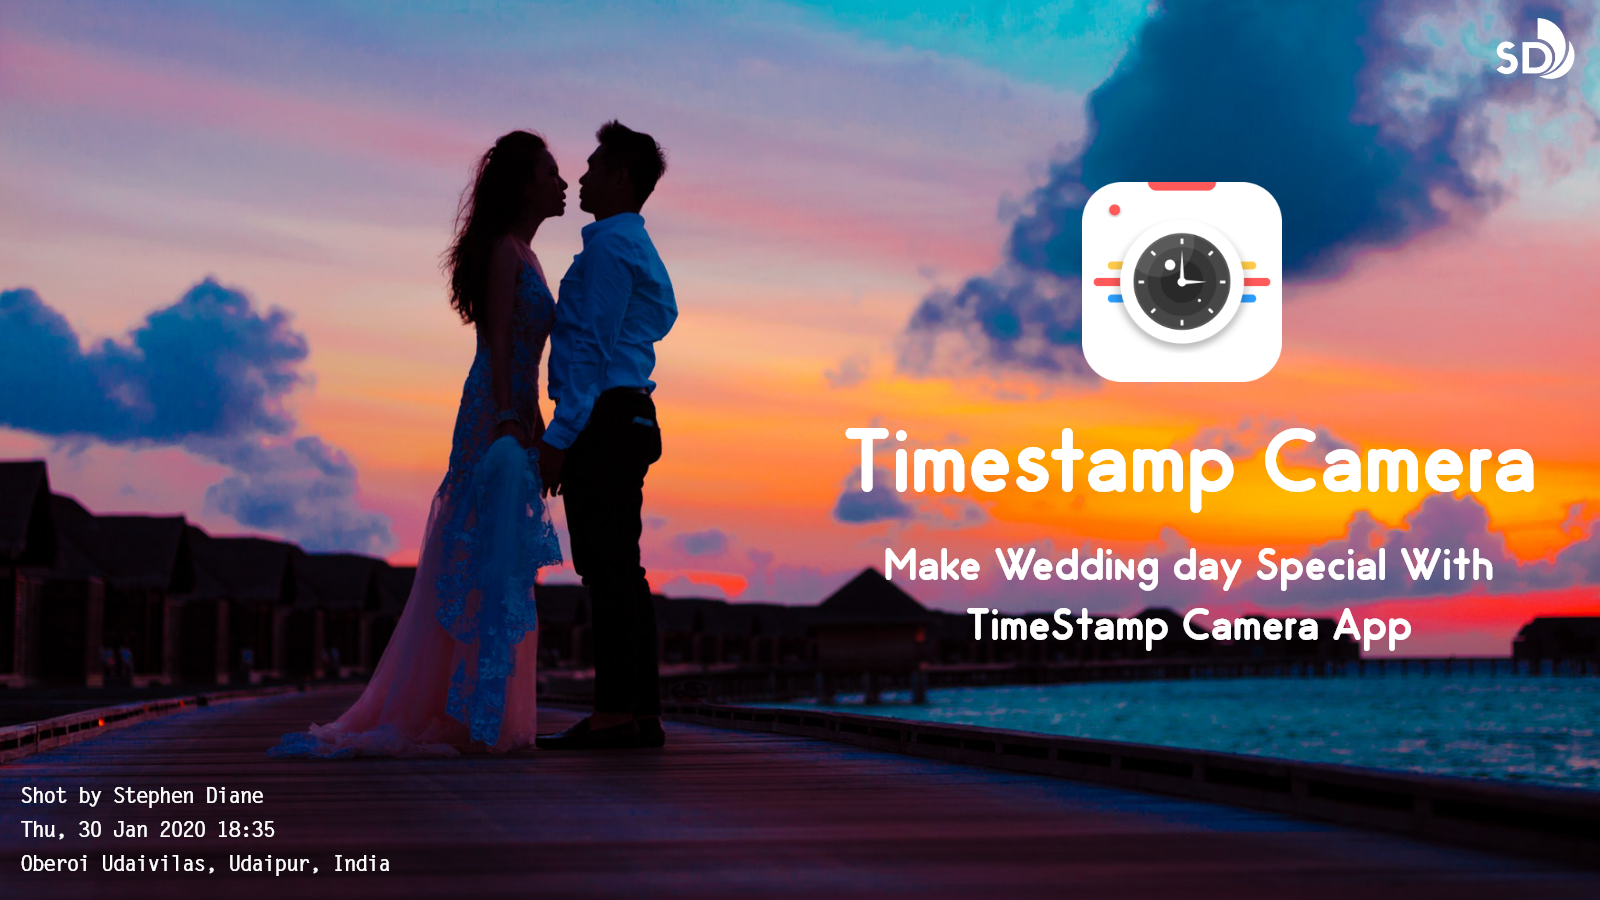 Timestamp camera: Auto Datetime Stamper